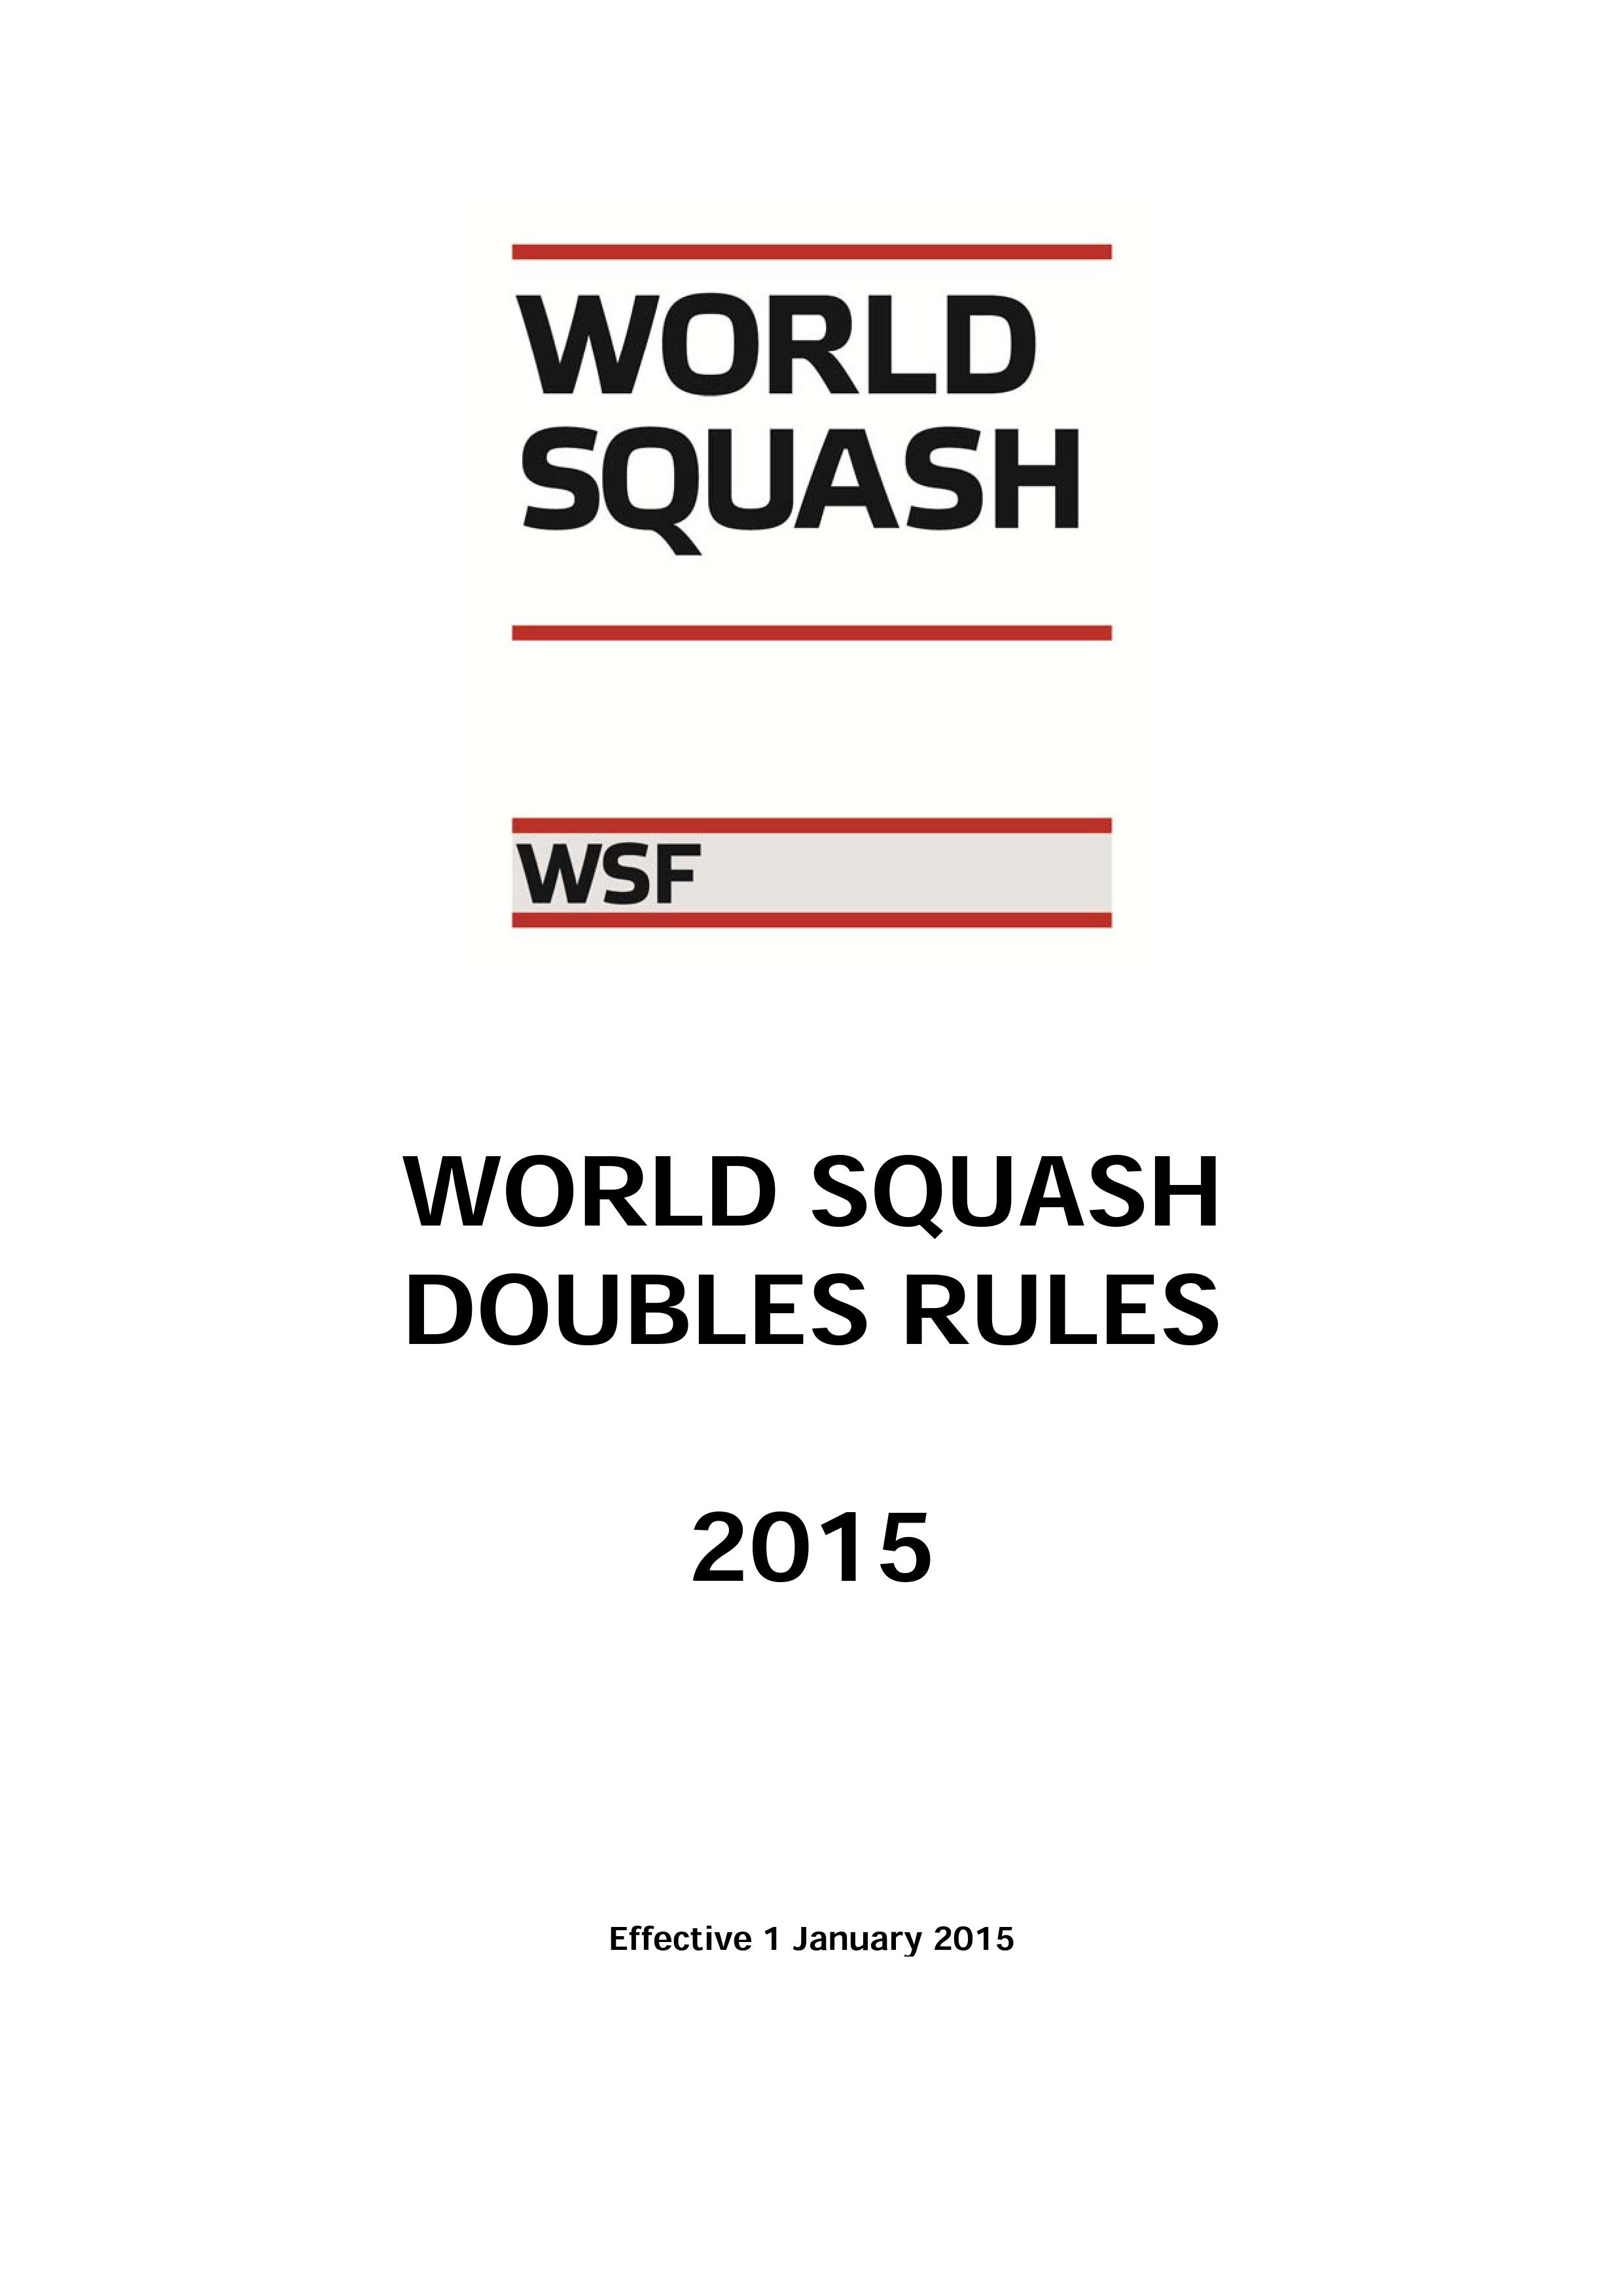 World Squash Federation Doubles Rules - Global Squash Coach - Page 1.jpg